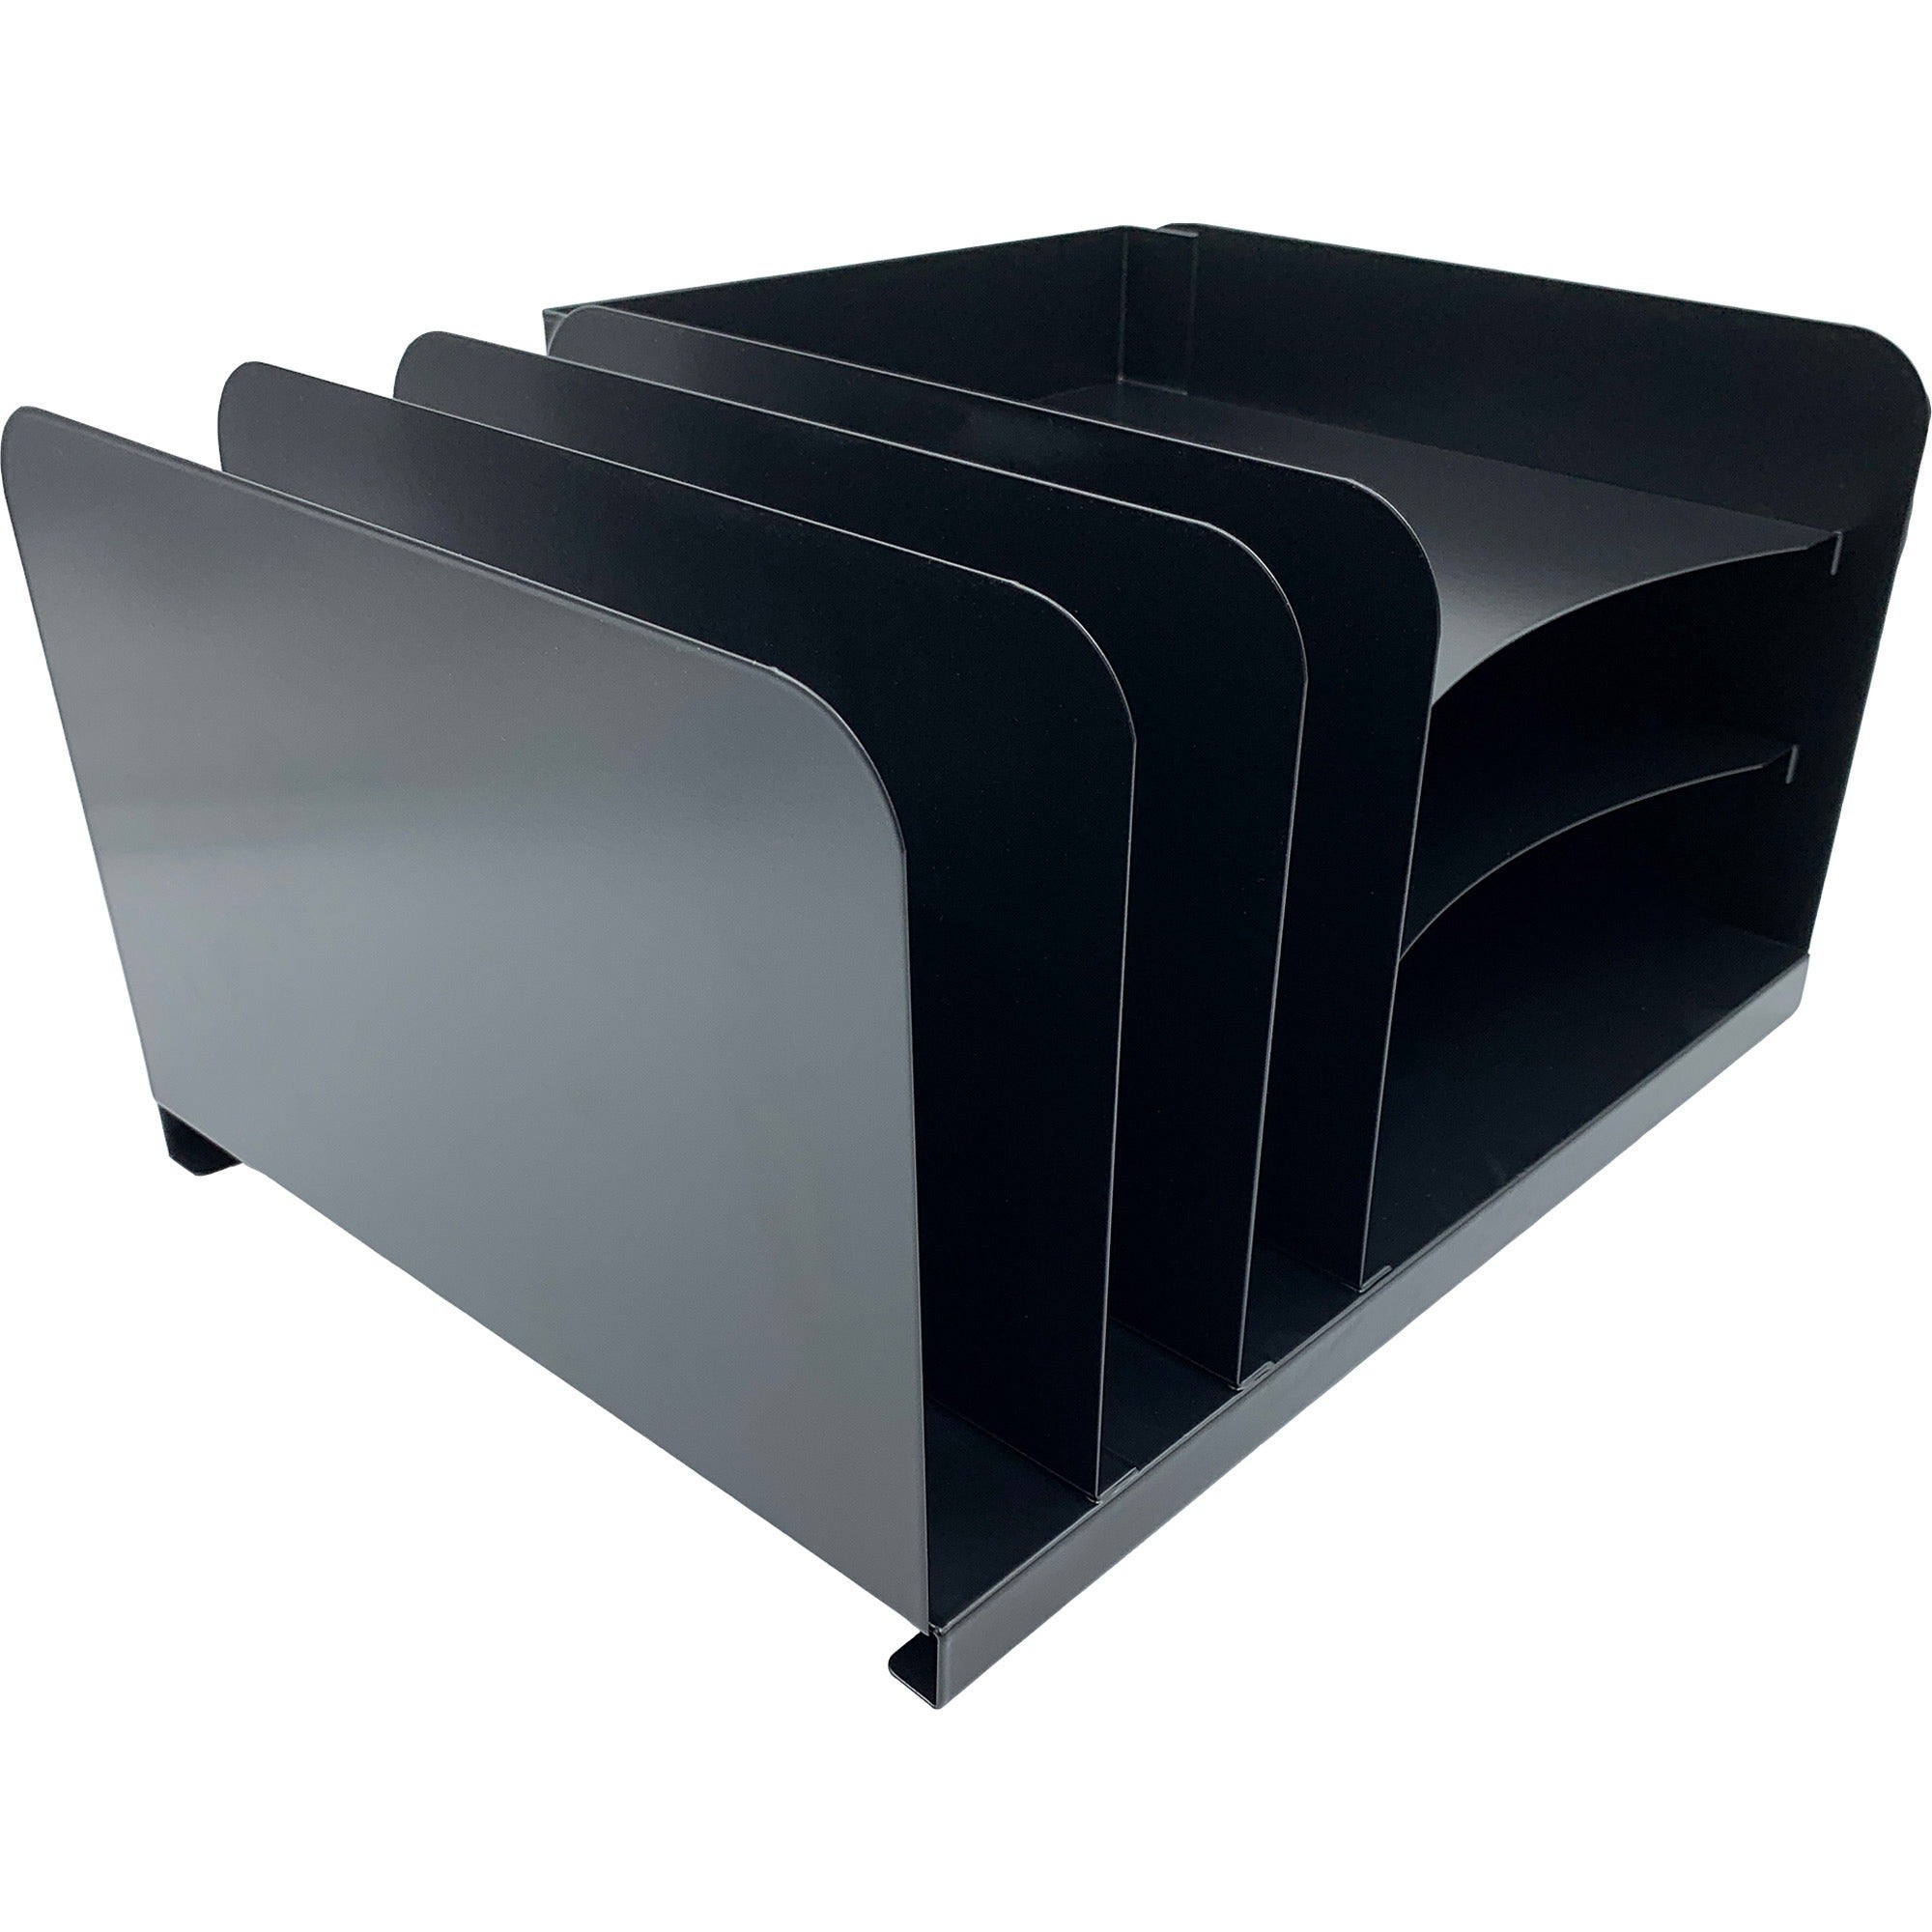 huron-combo-slots-desk-organizer-6-compartments-horizontal-vertical-8-height-x-15-width-x-11-depth-durable-black-steel-1-each_hurhasz0148 - 2